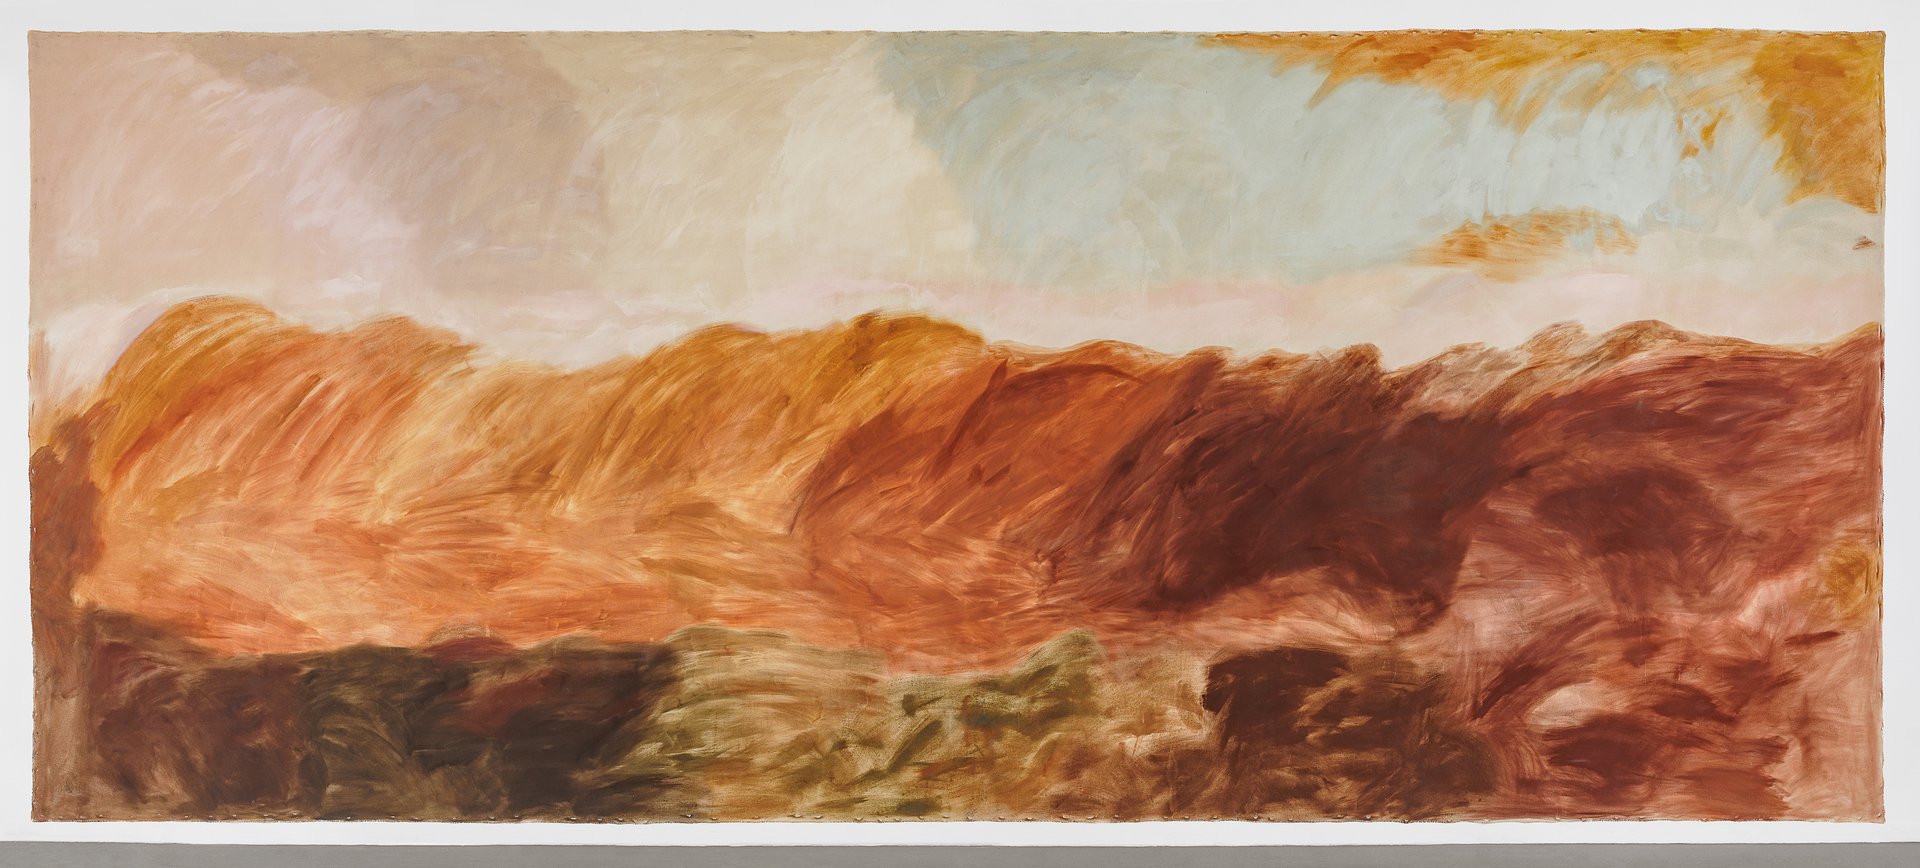 Dominique KnowlesMorning Pasture, 2020Oil on canvas304.8 x 762 cm